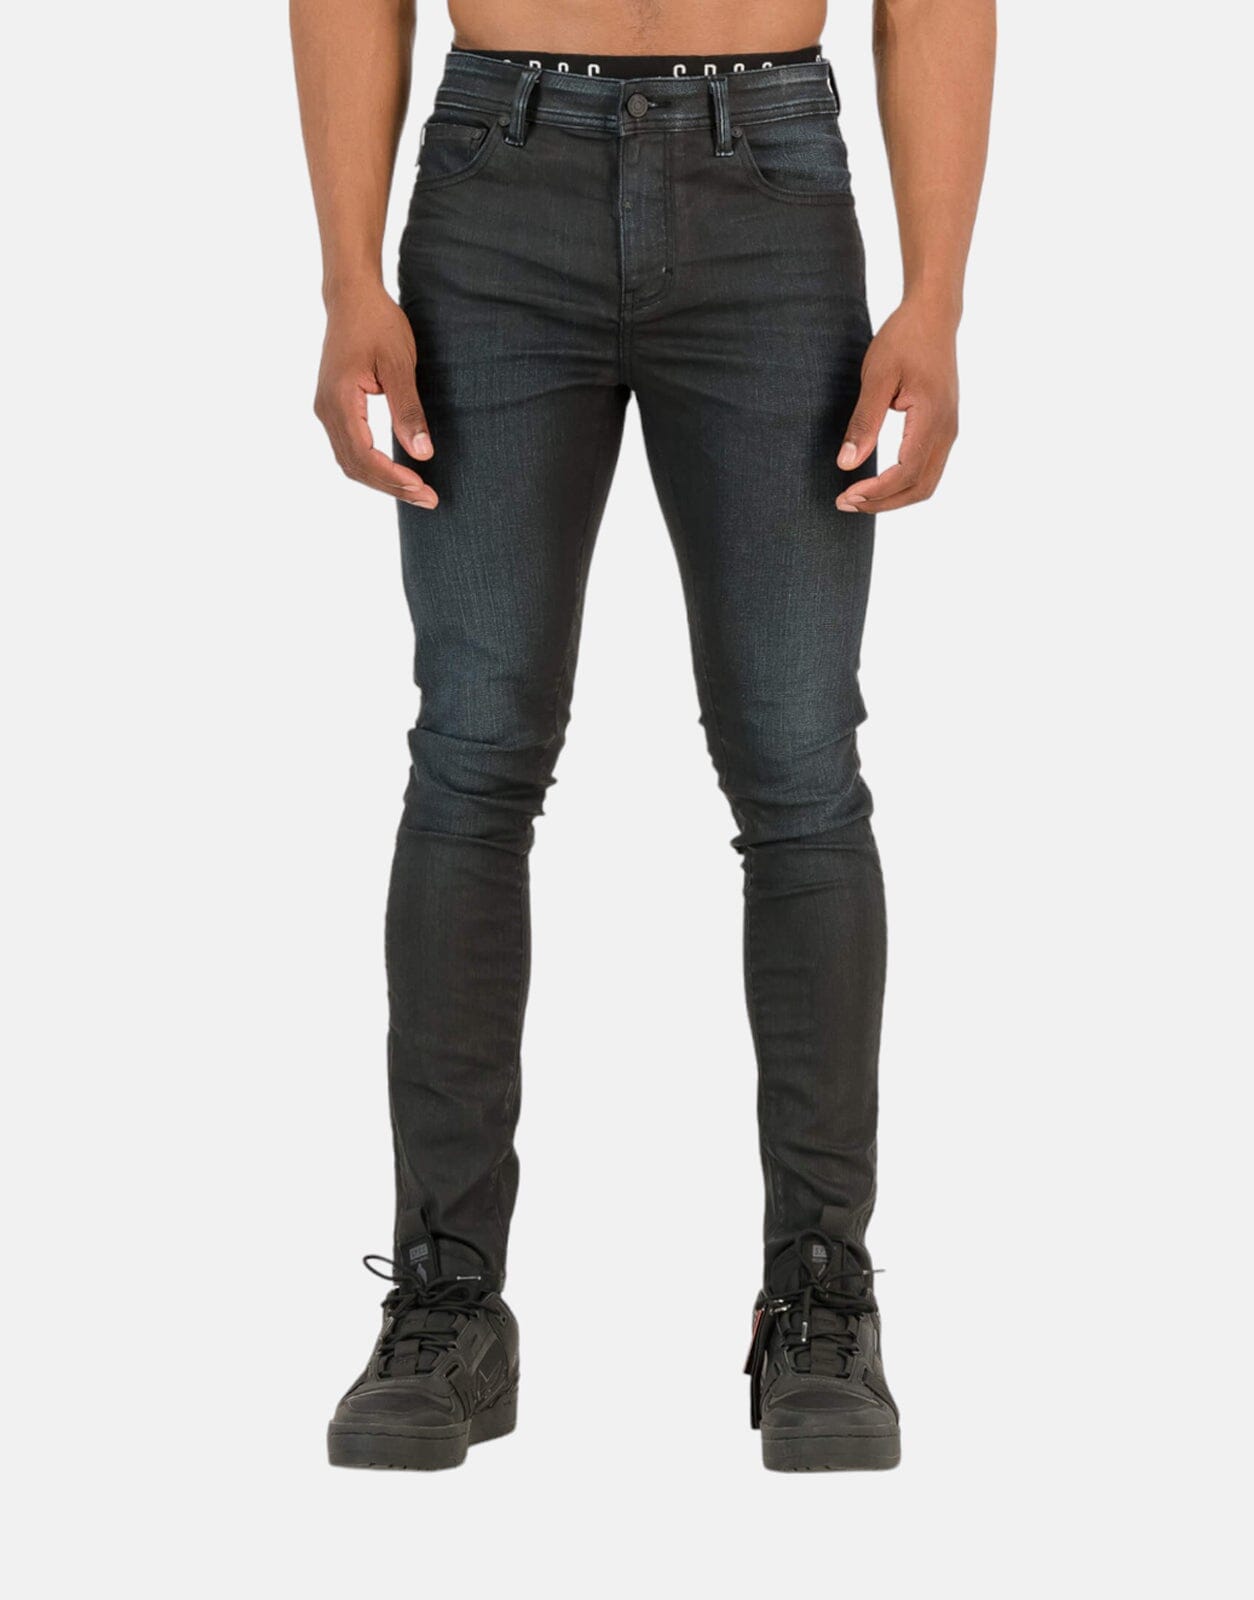 SPCC Hydris Black Jeans - Subwear